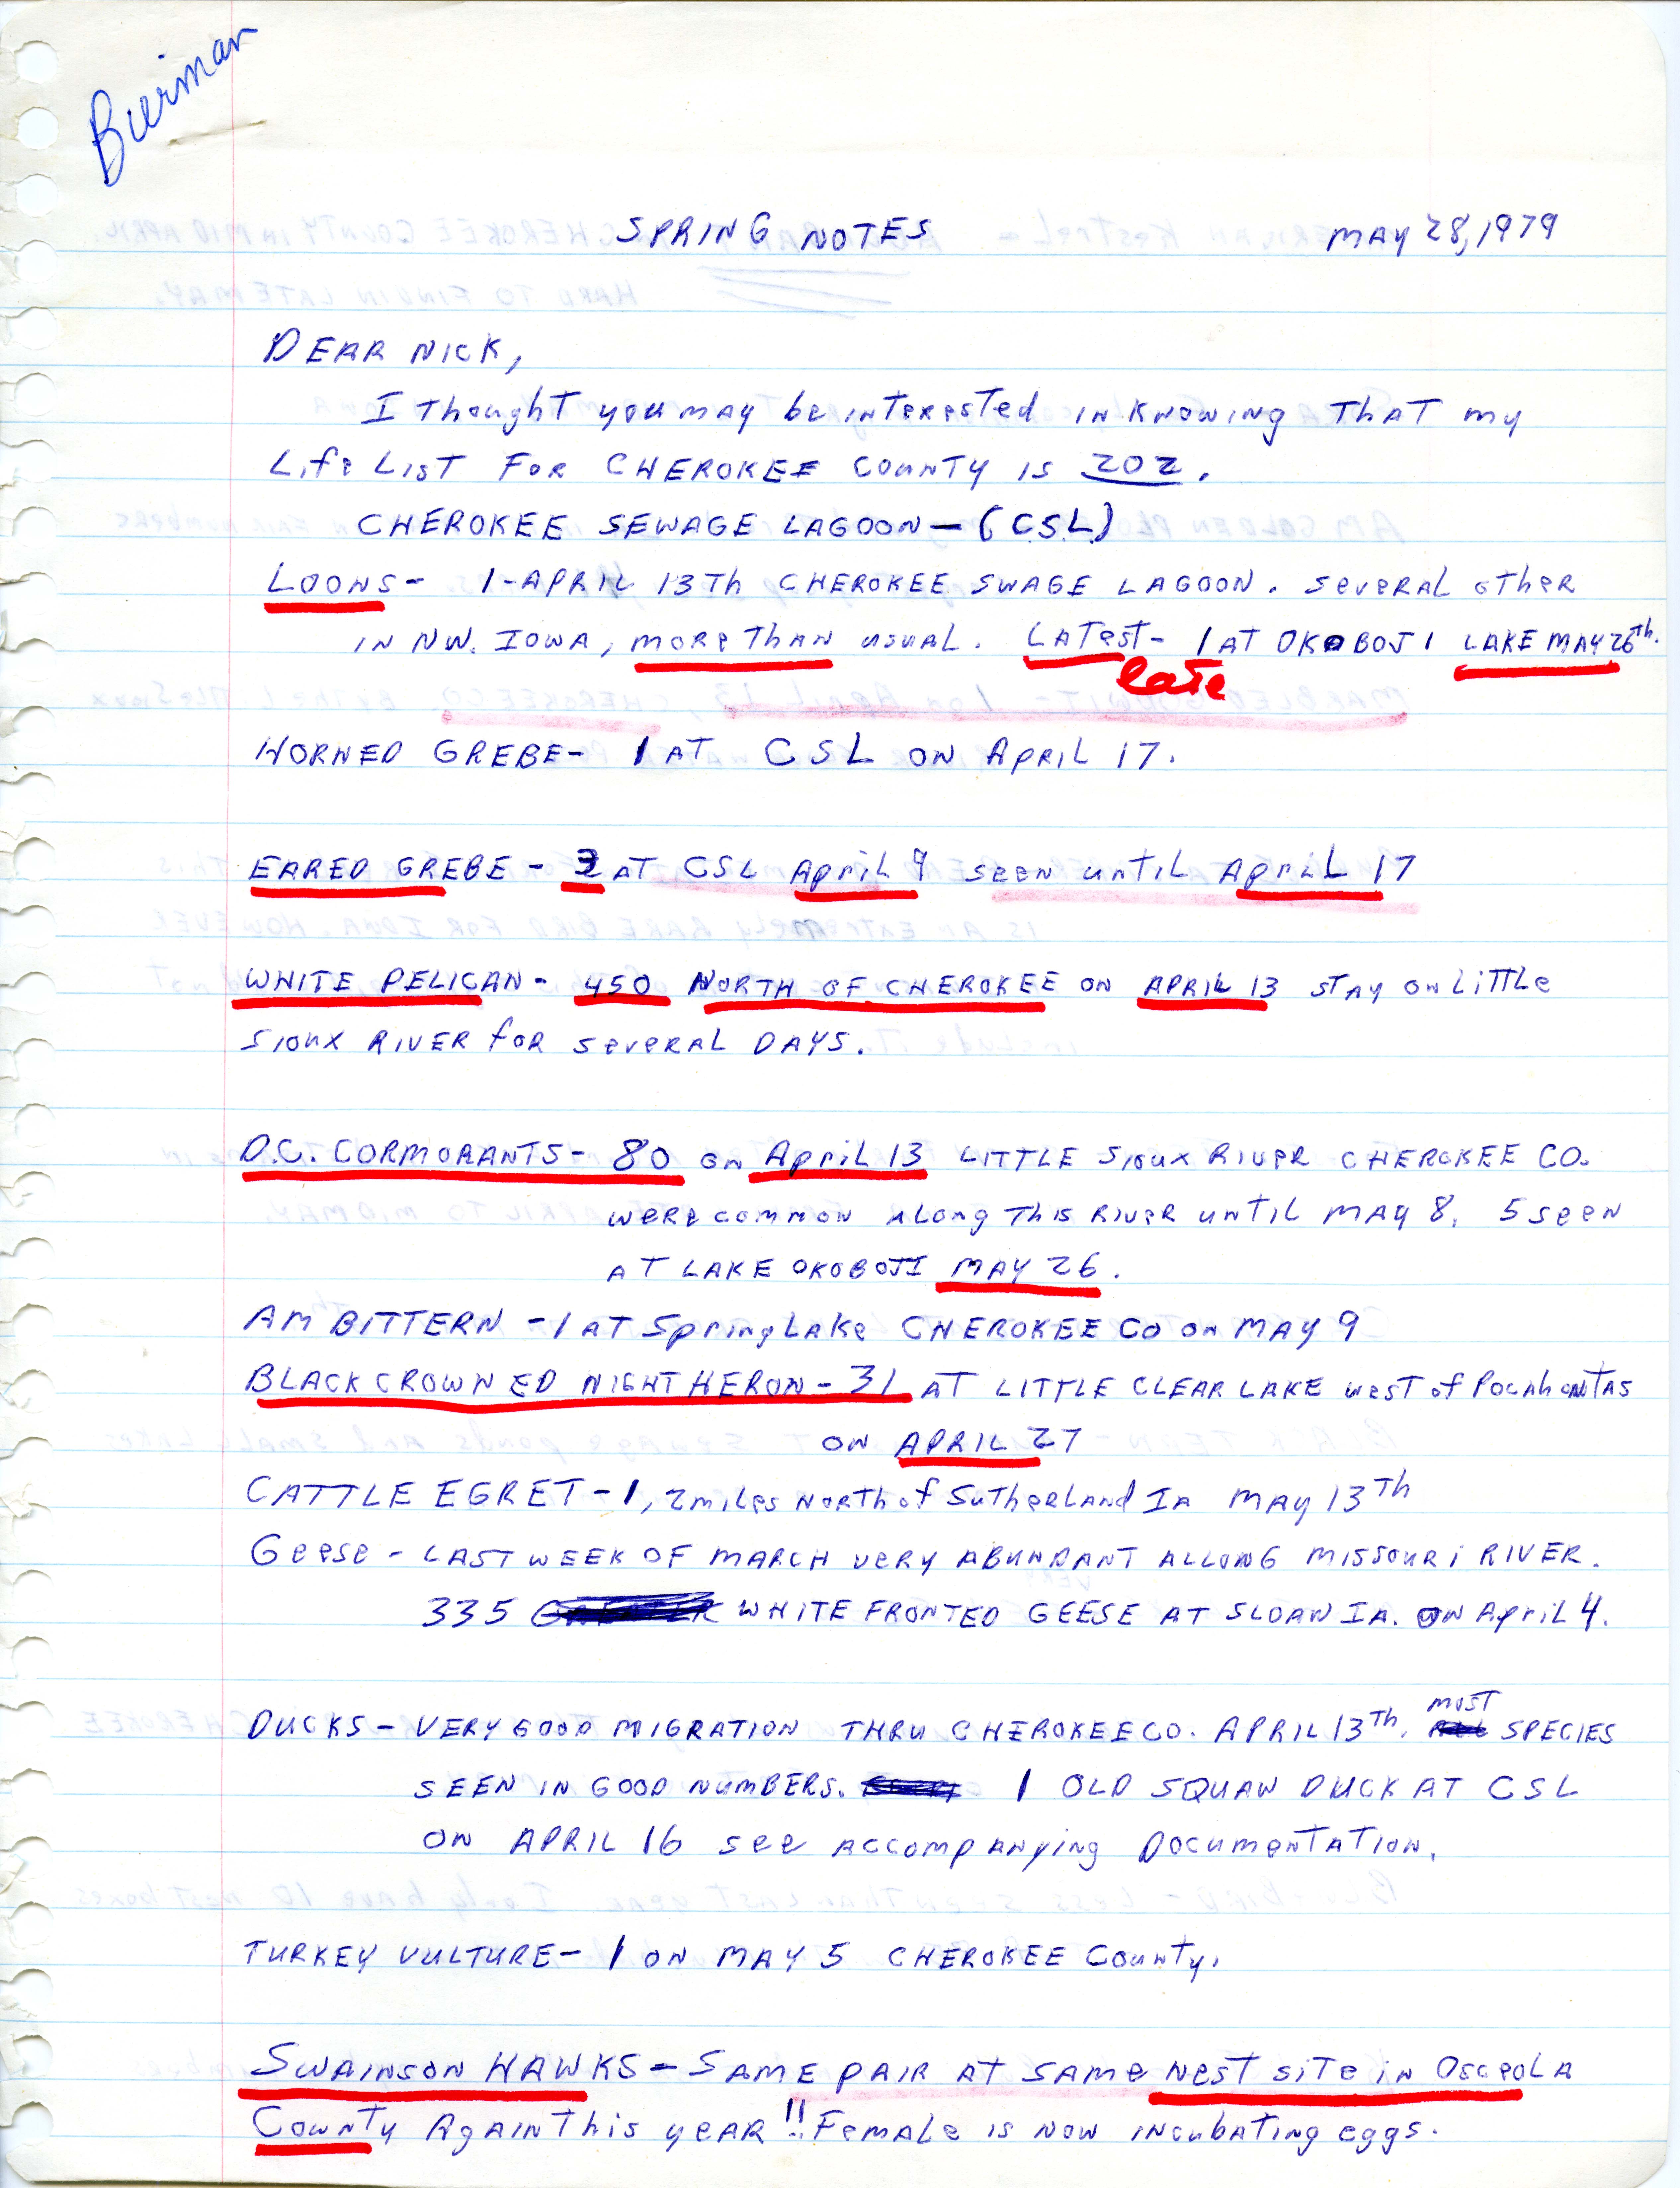 Dick Bierman letter to Nicholas S. Halmi regarding spring bird sightings, May 28, 1979